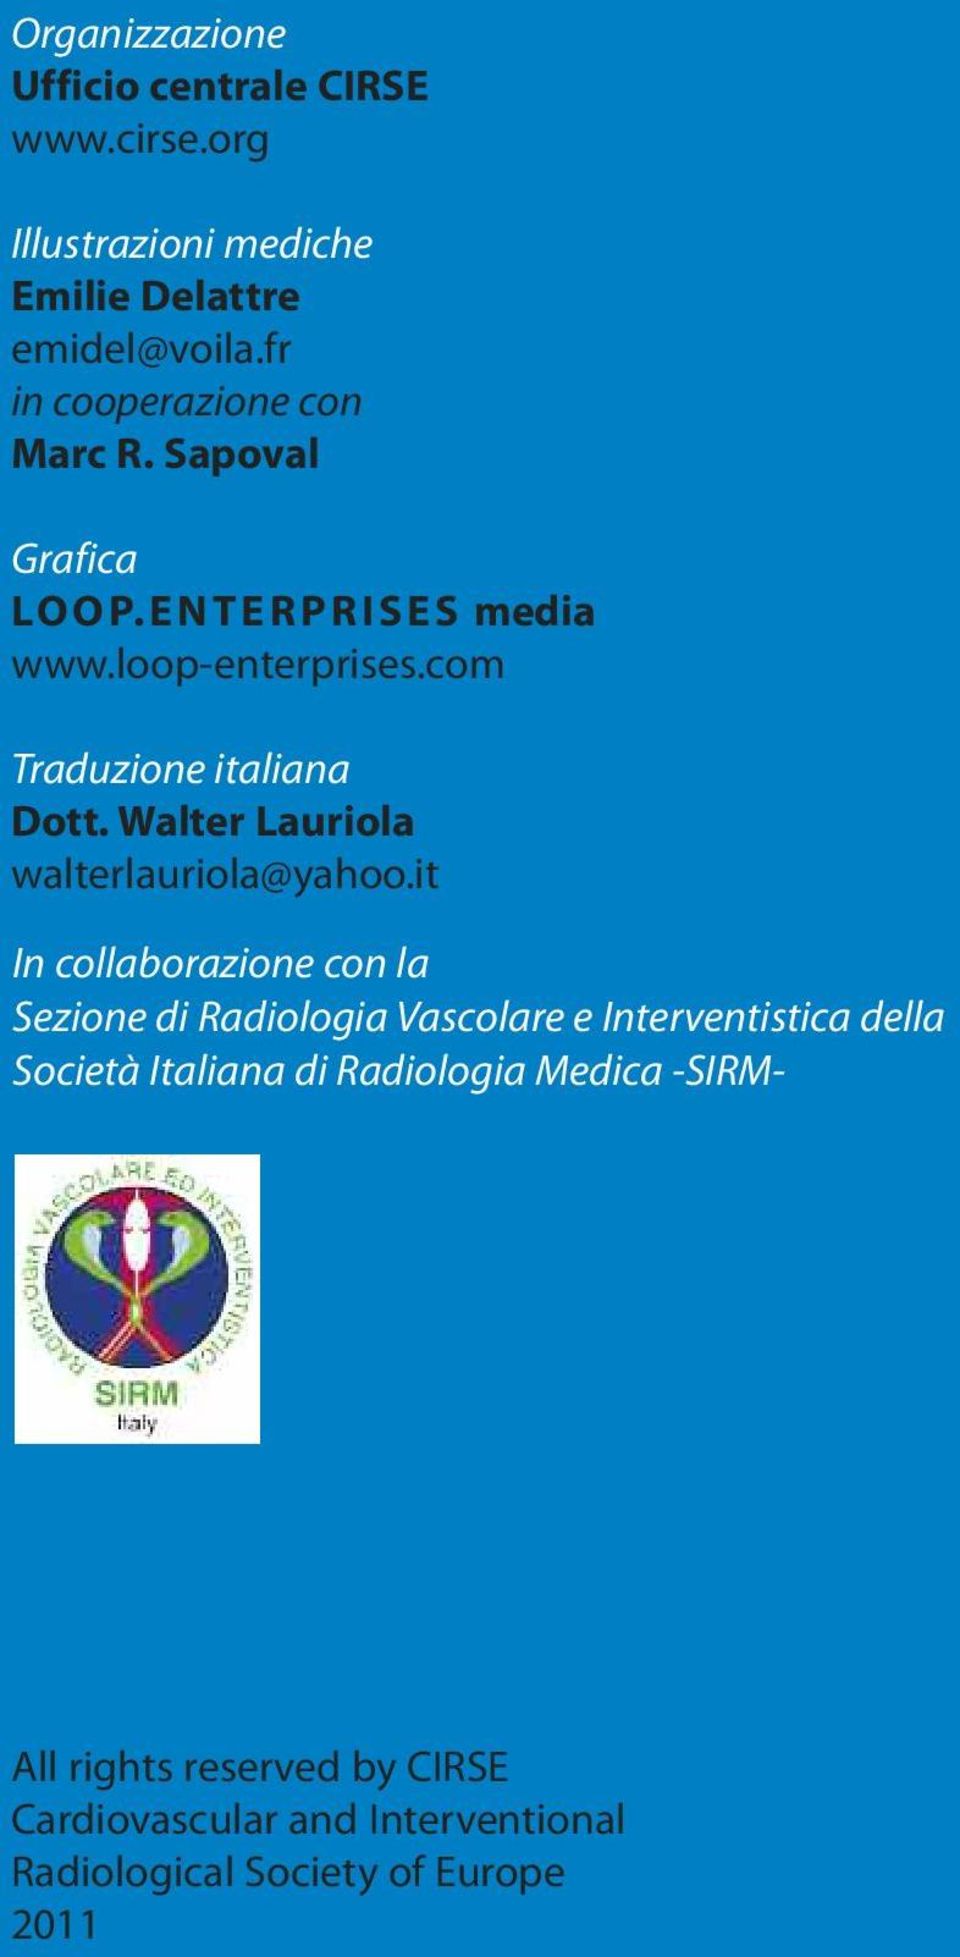 loop-enterprises.com Traduzione italiana Dott. Walter Lauriola walterlauriola@yahoo.